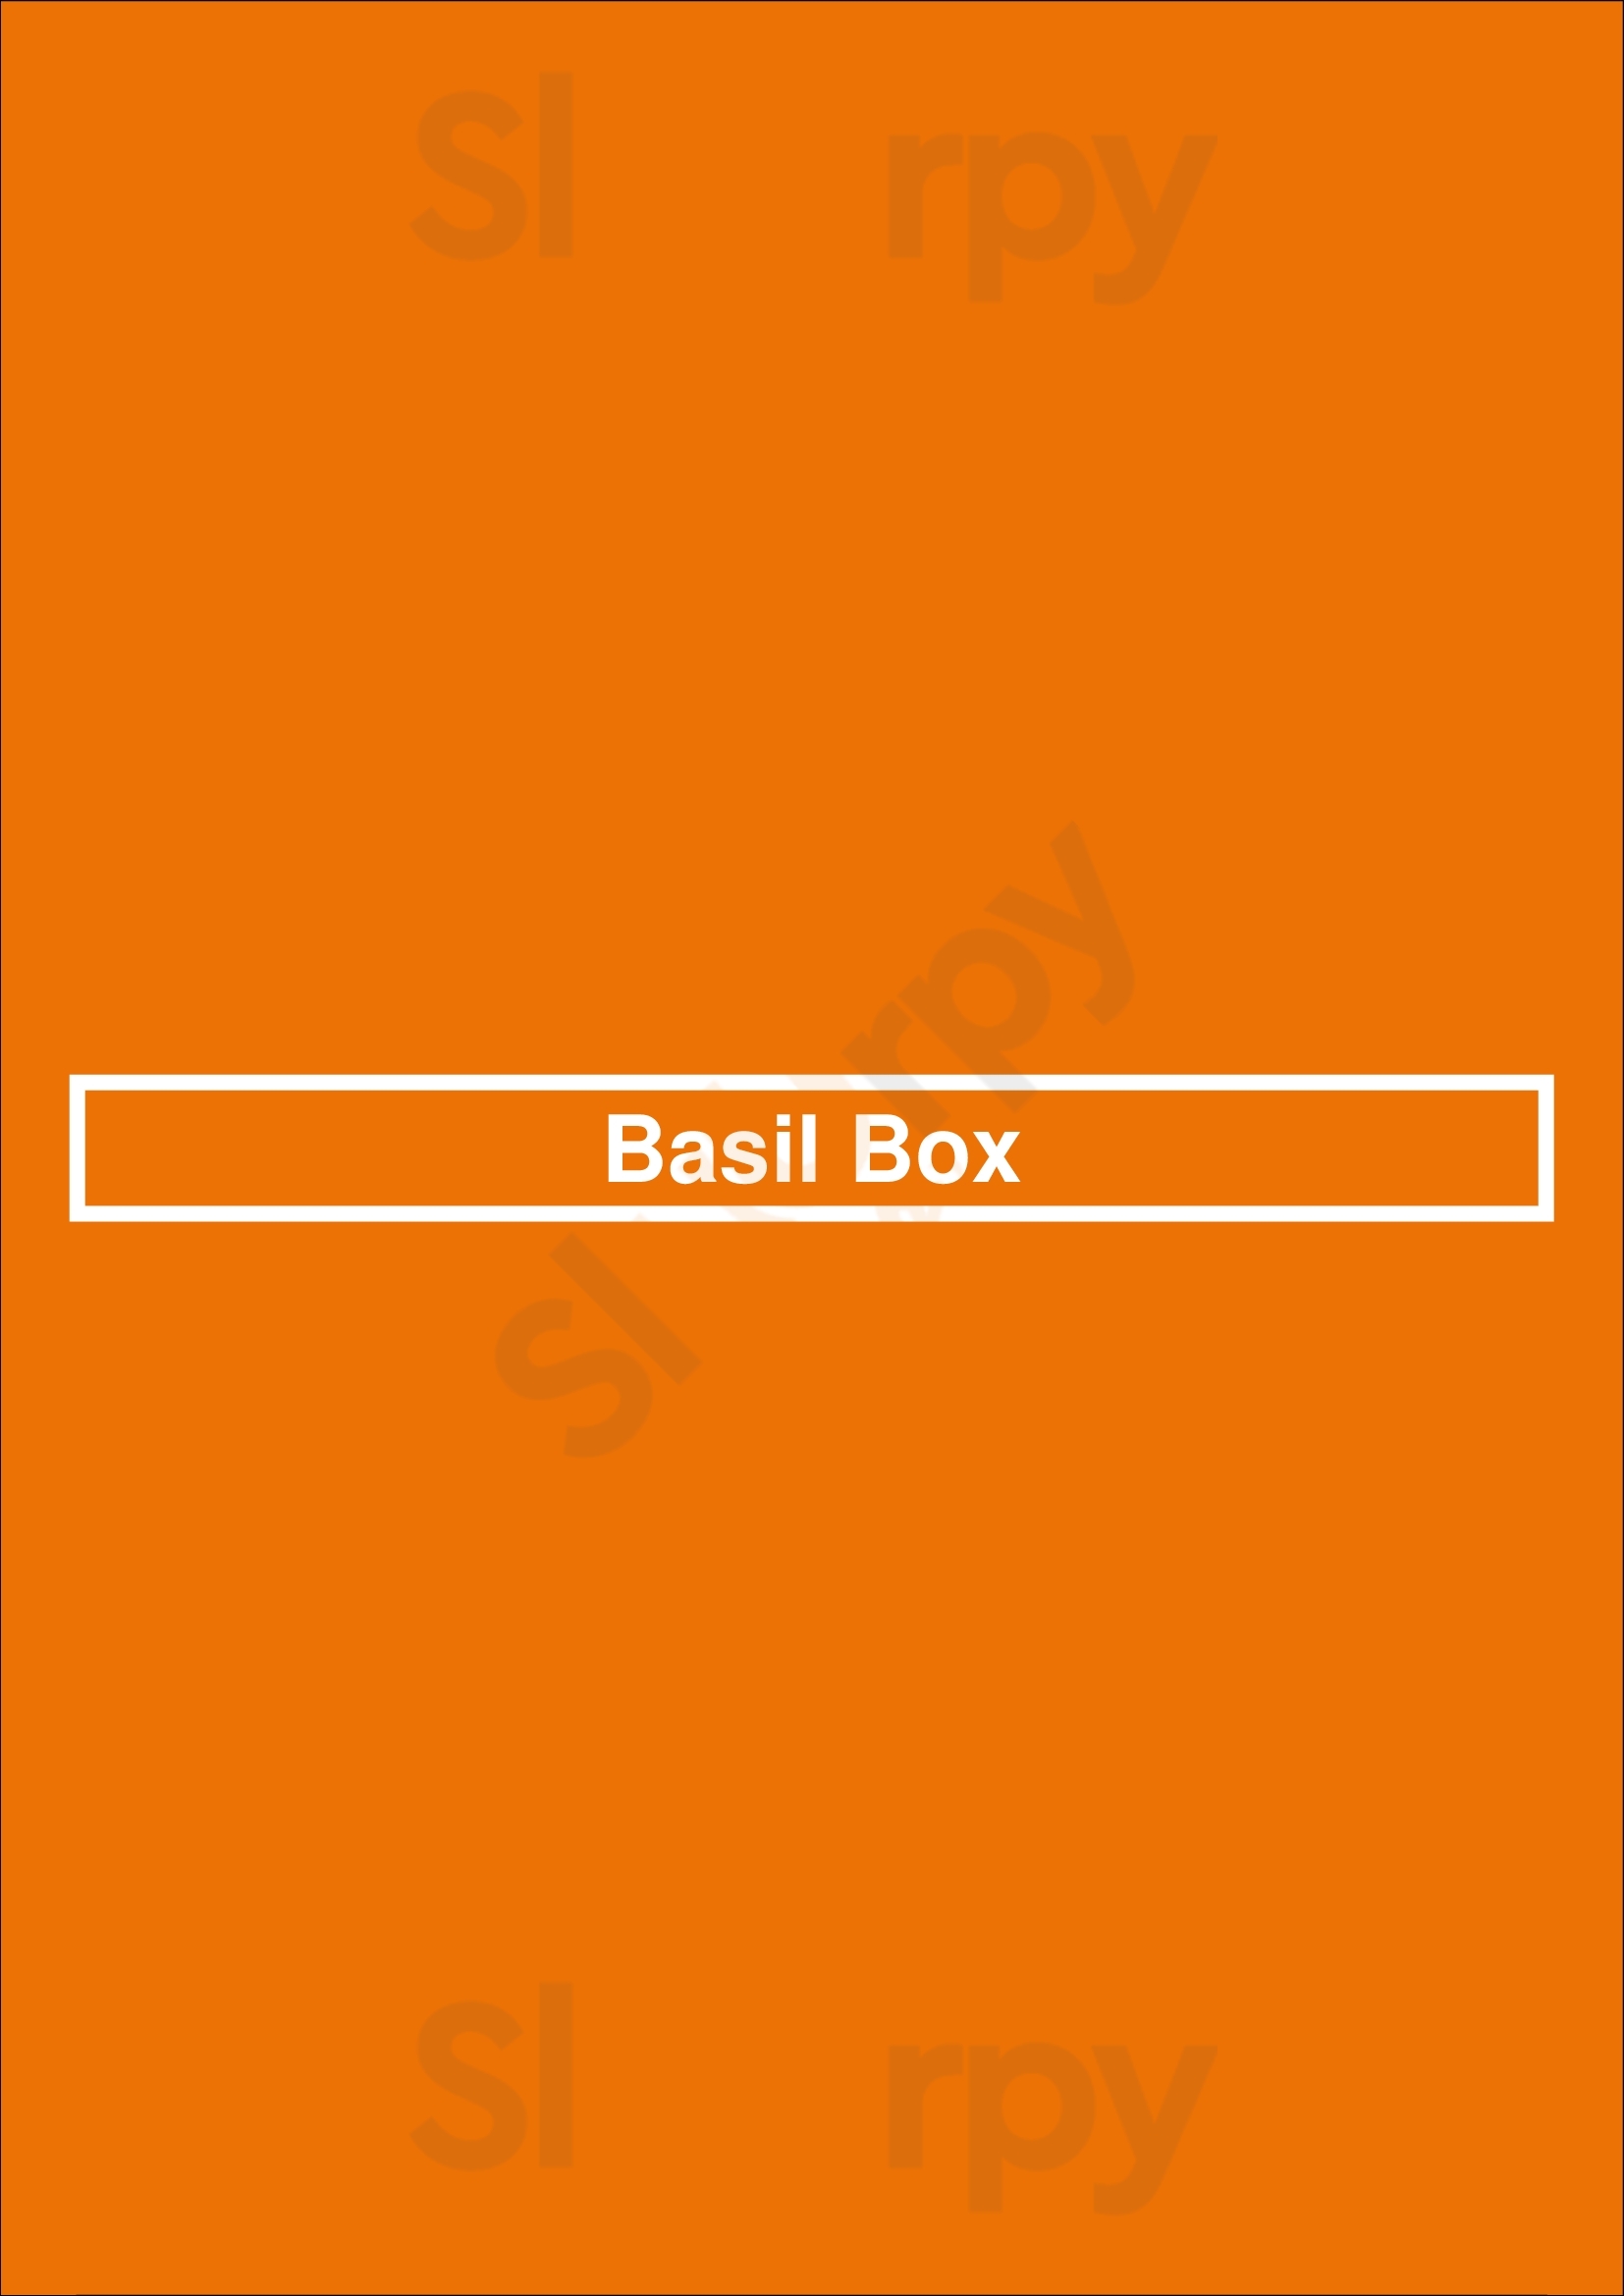 Basil Box Vancouver Menu - 1